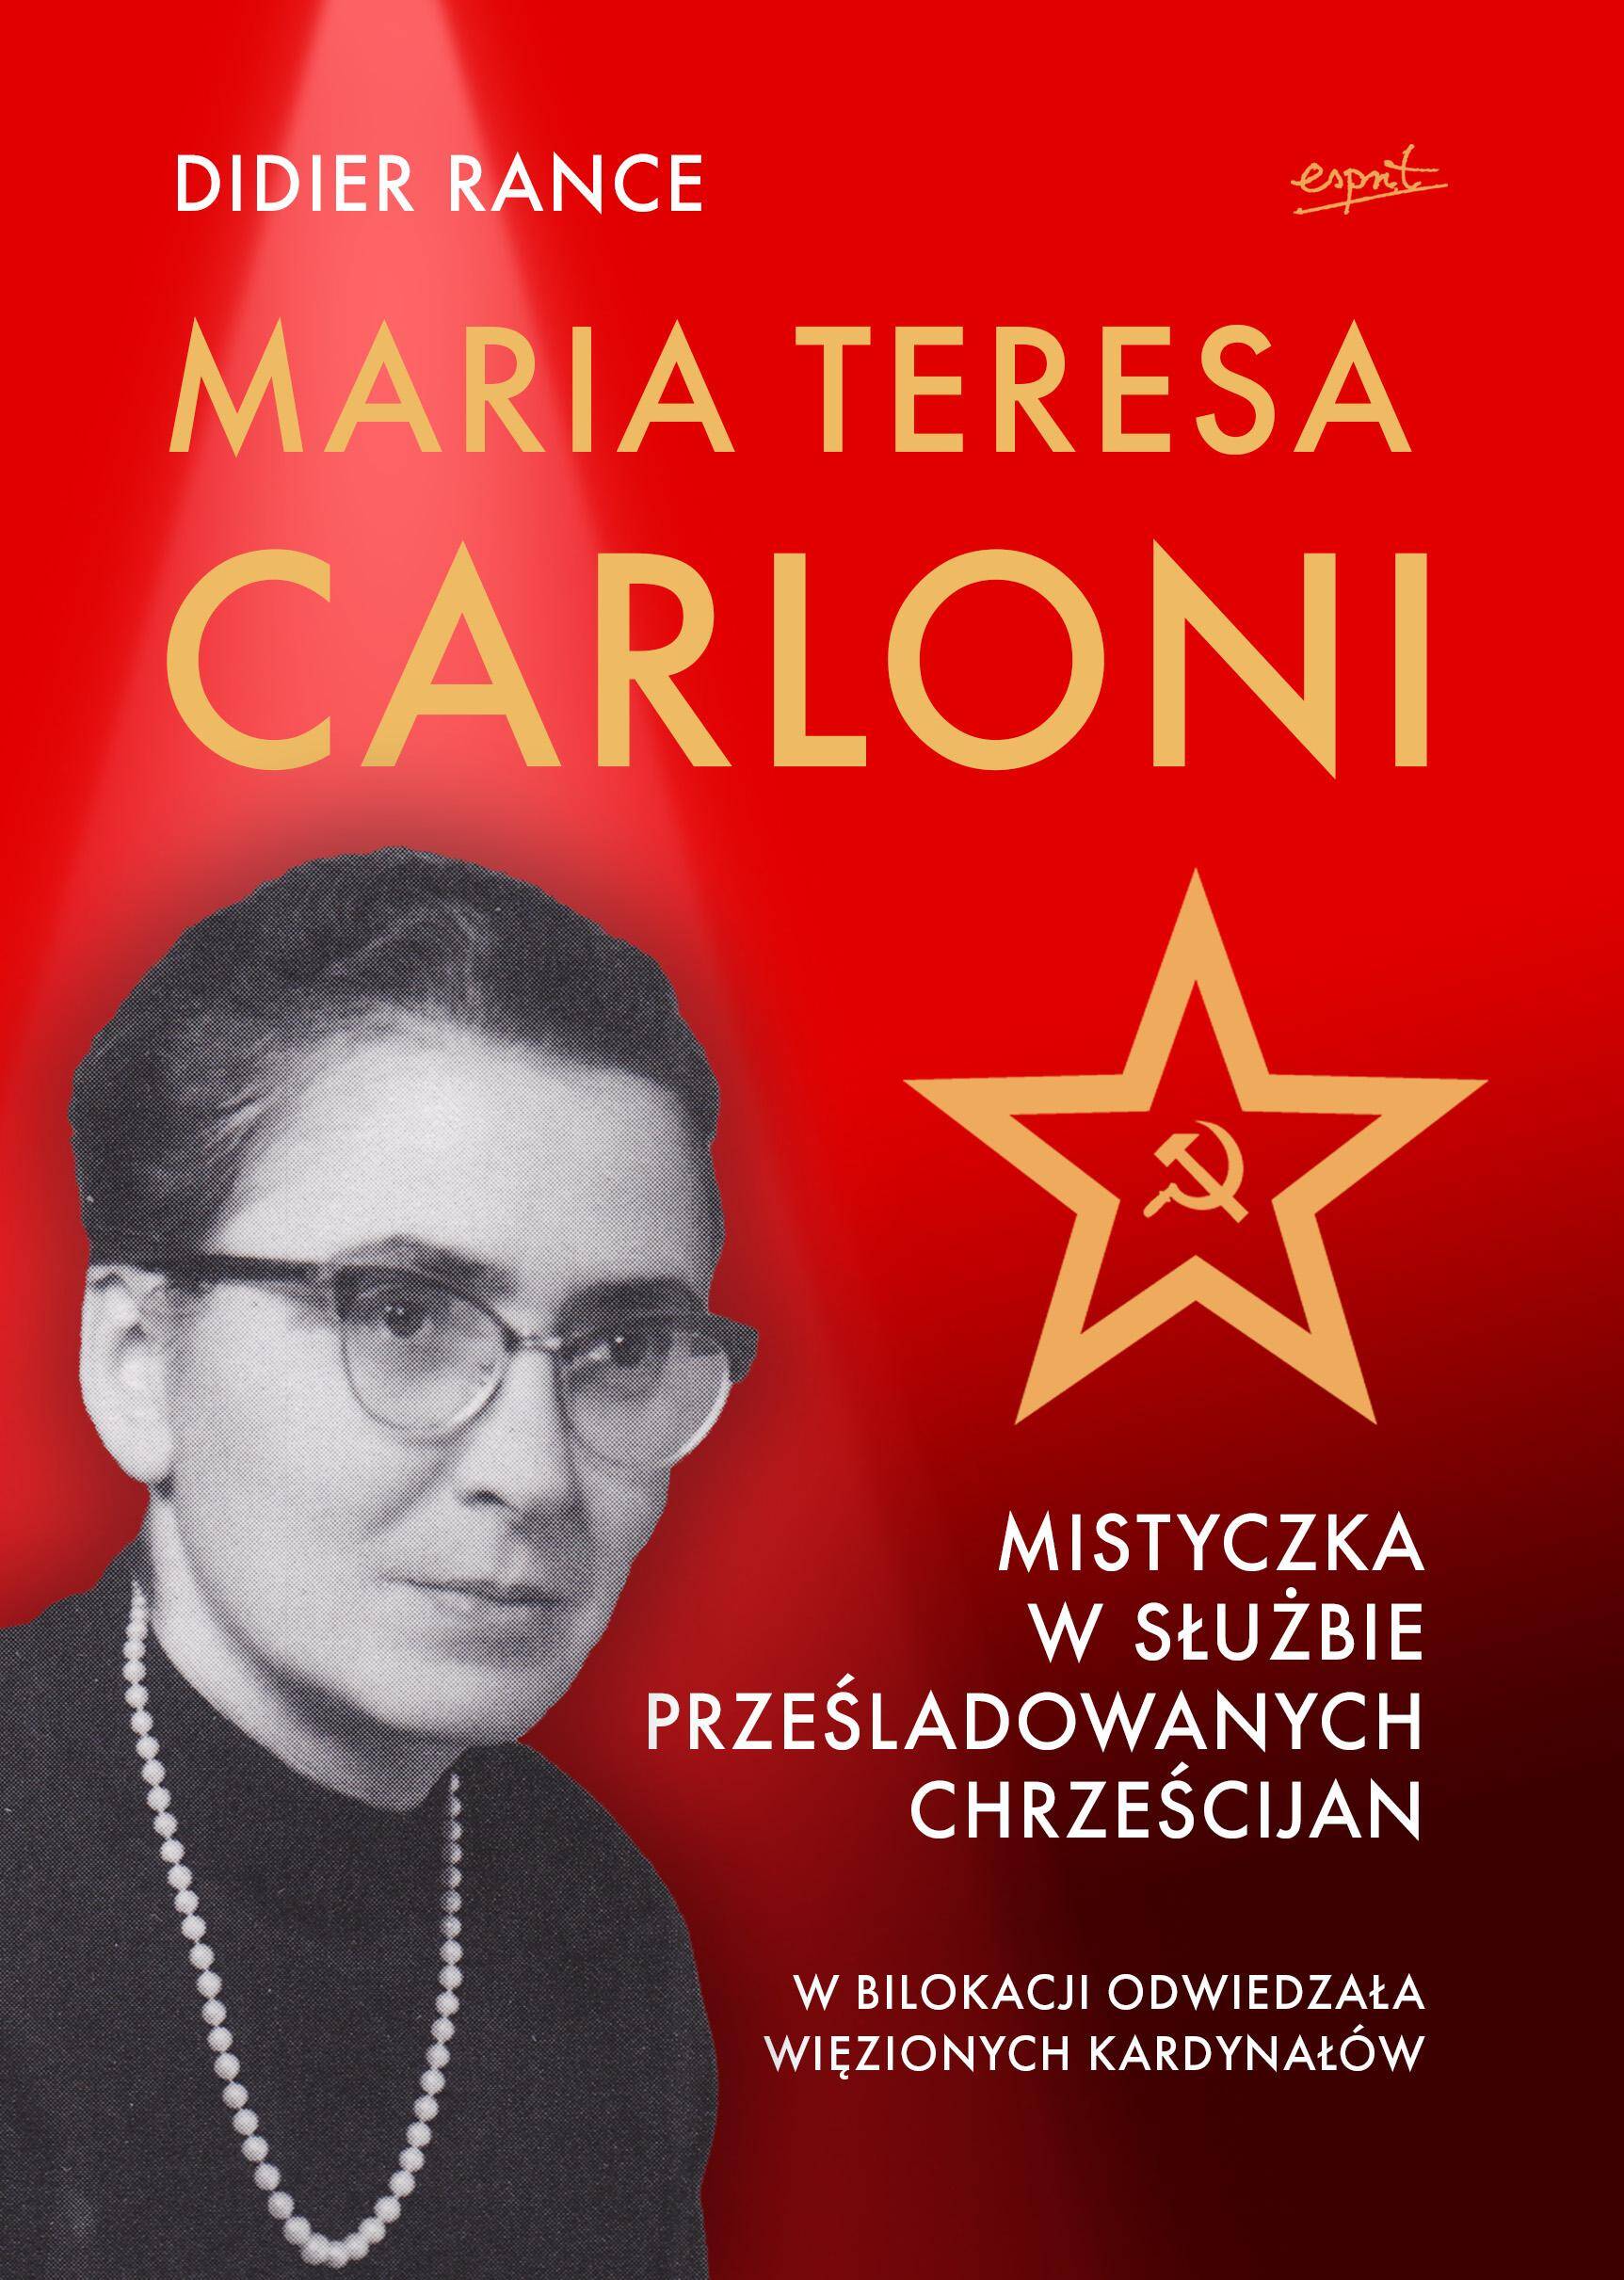 Maria Teresa Carloni